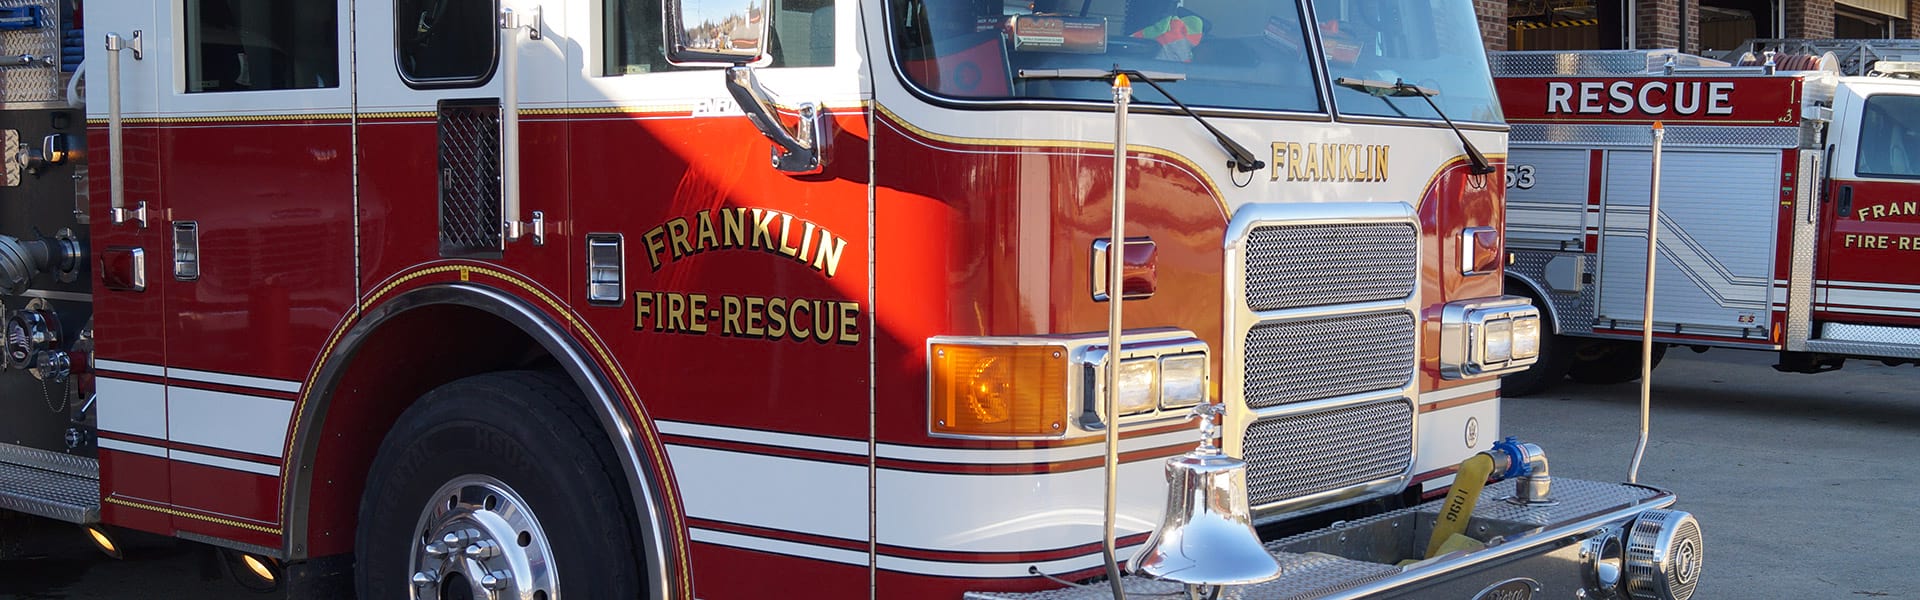 Franklin Fire Rescue Franklin NC